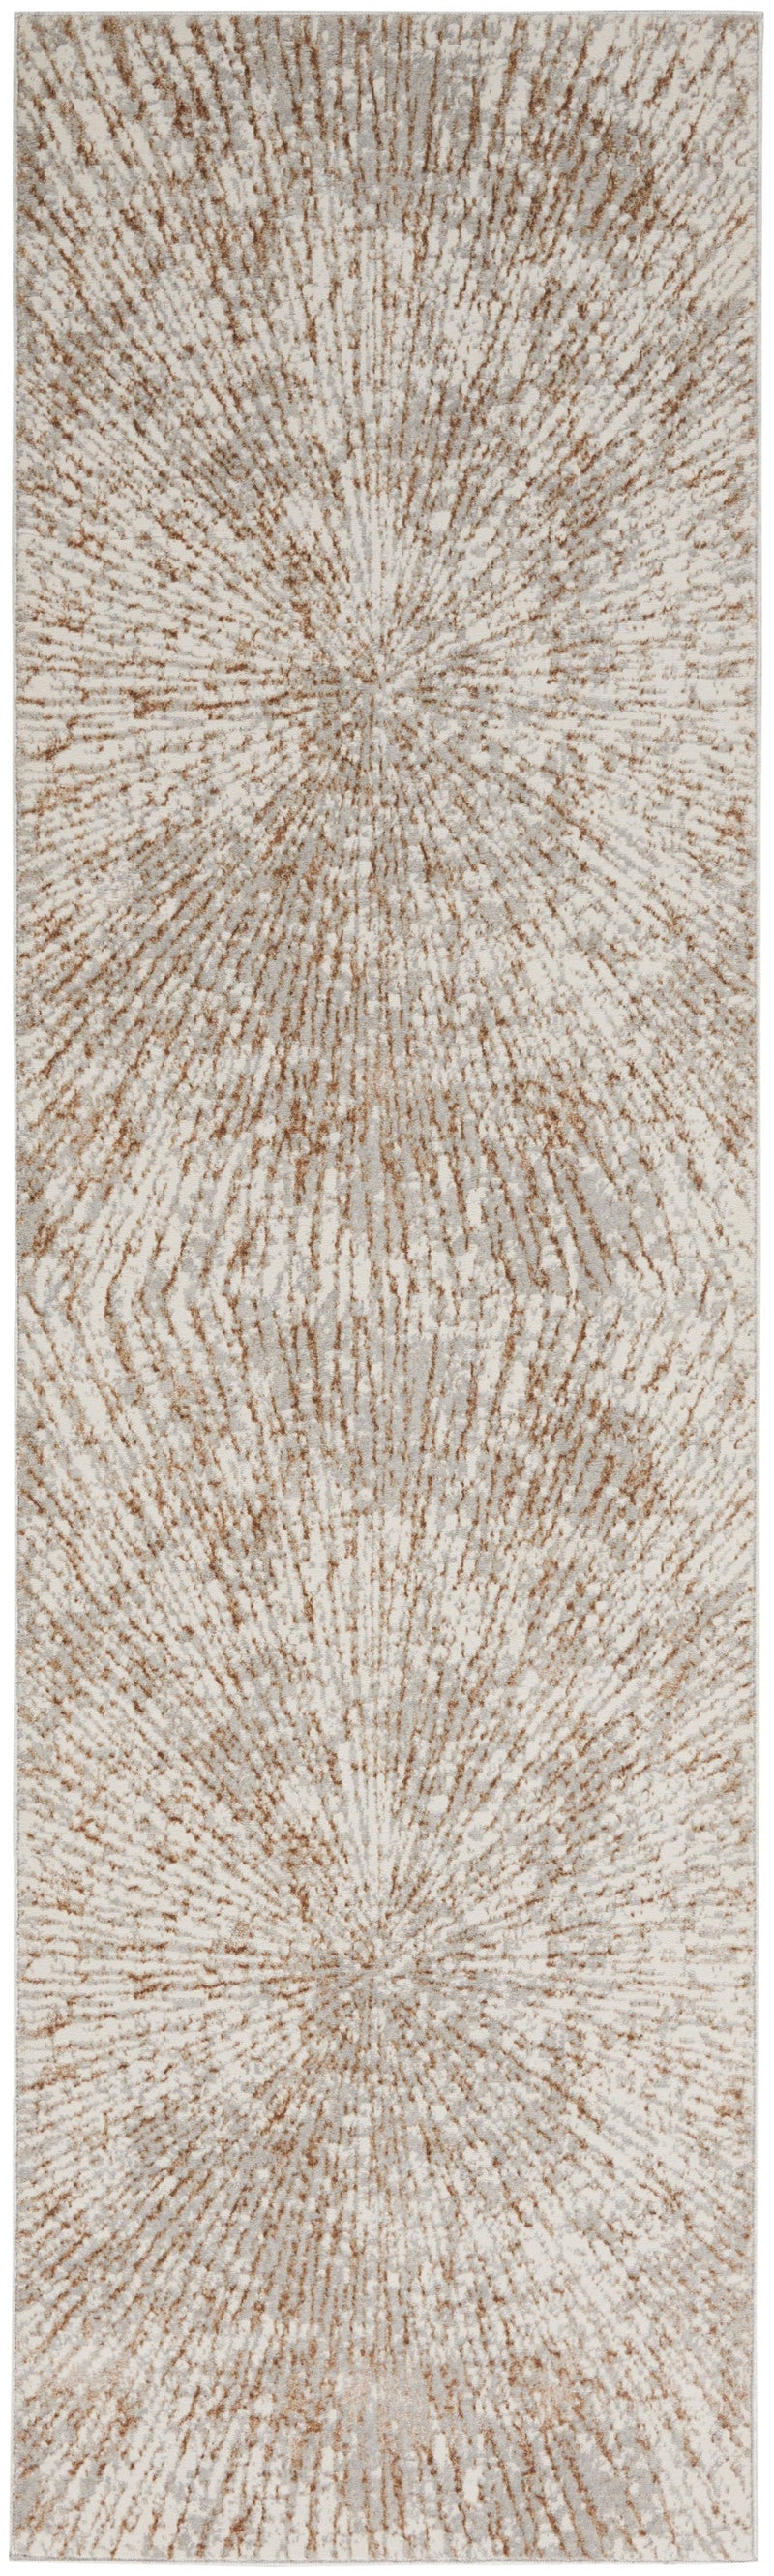 media image for metallic grey mocha rug by nourison 99446852892 redo 2 262